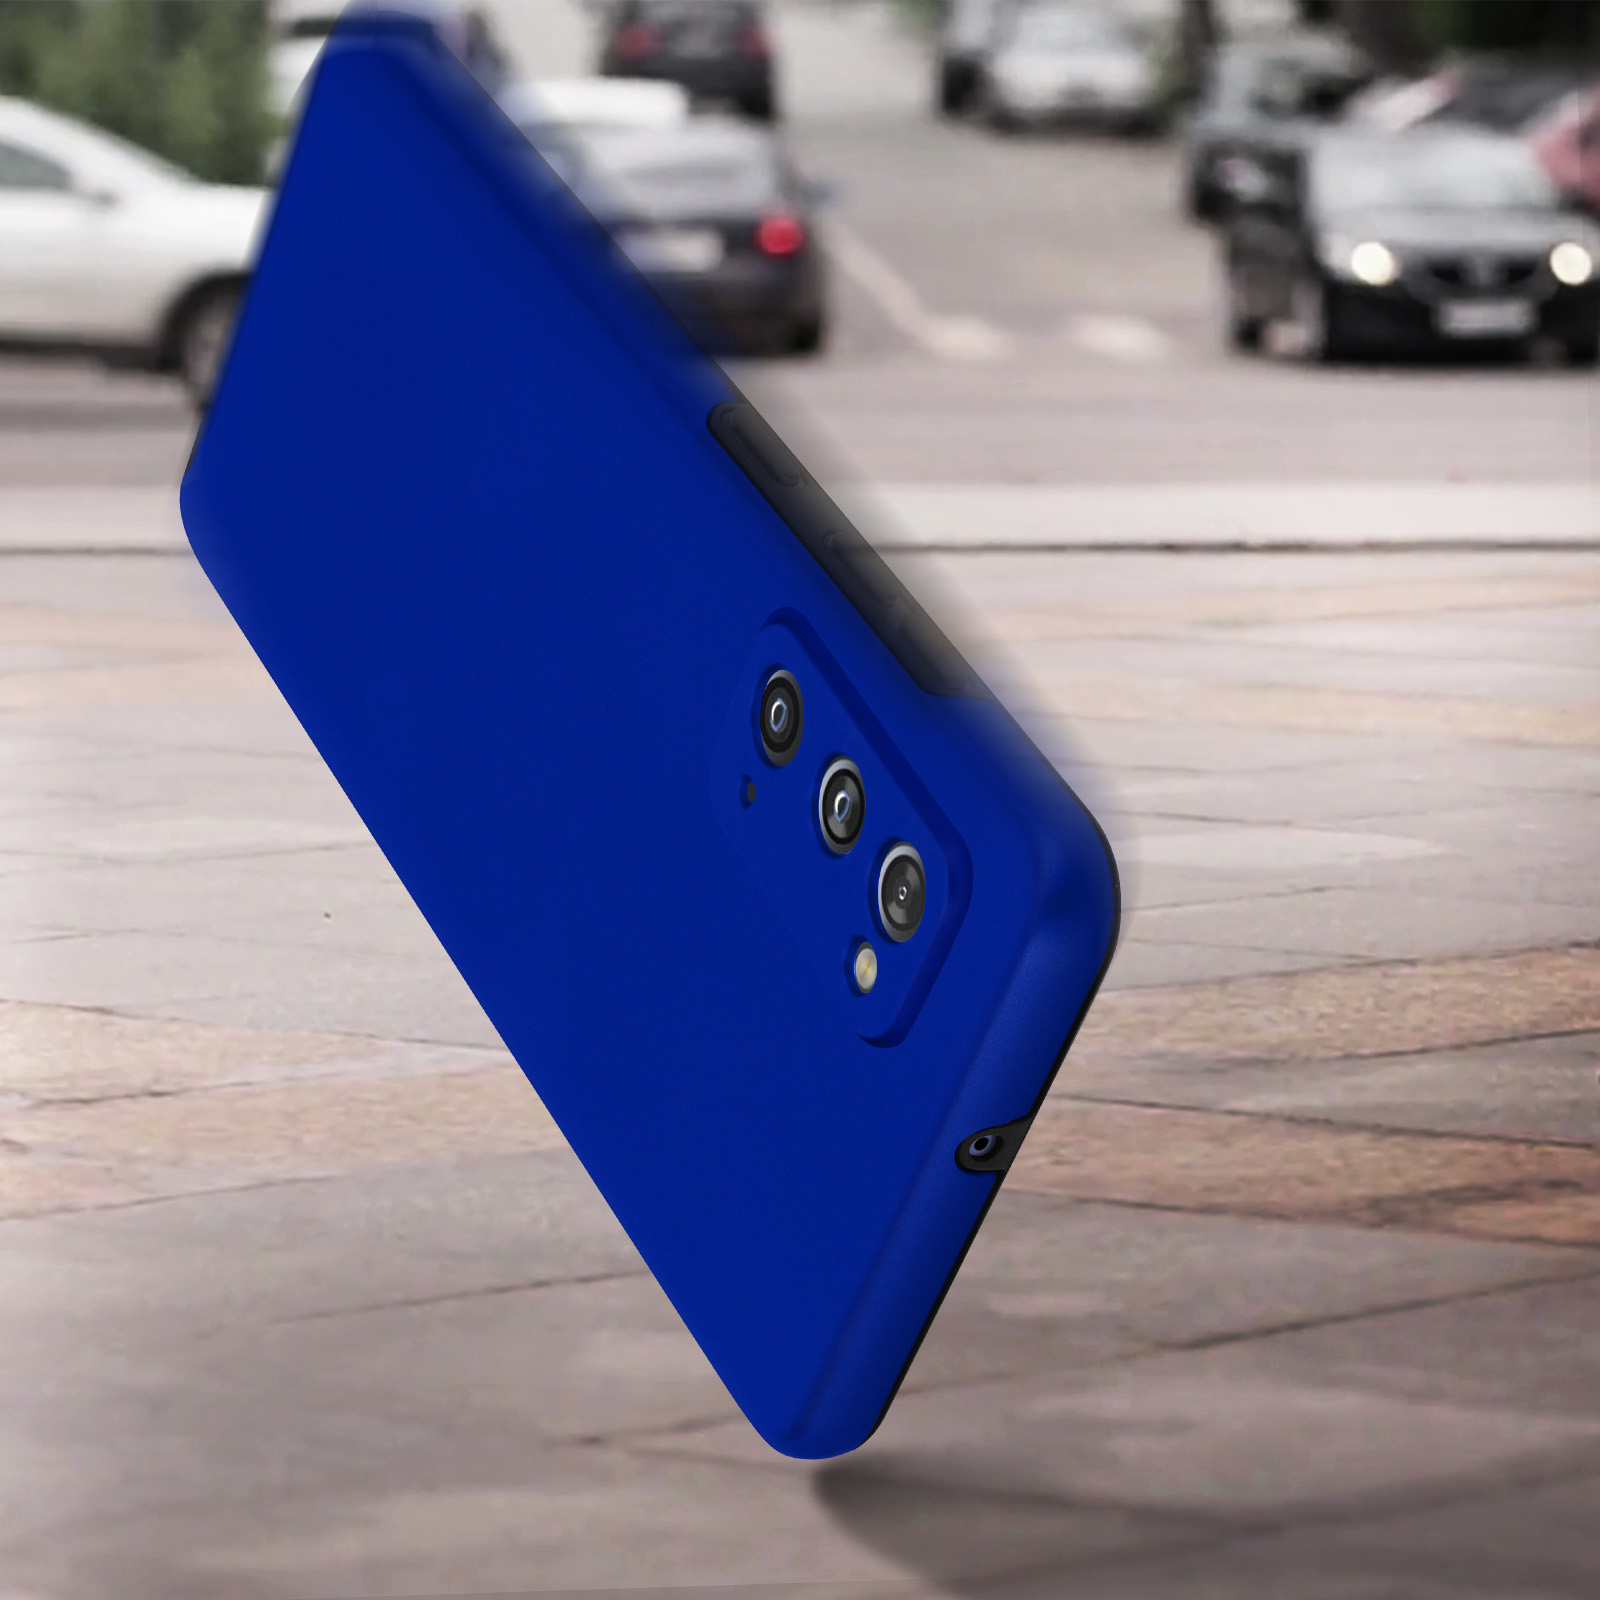 AVIZAR Rundumschutz Series, Blau Cover, Full Samsung, S20 Galaxy FE